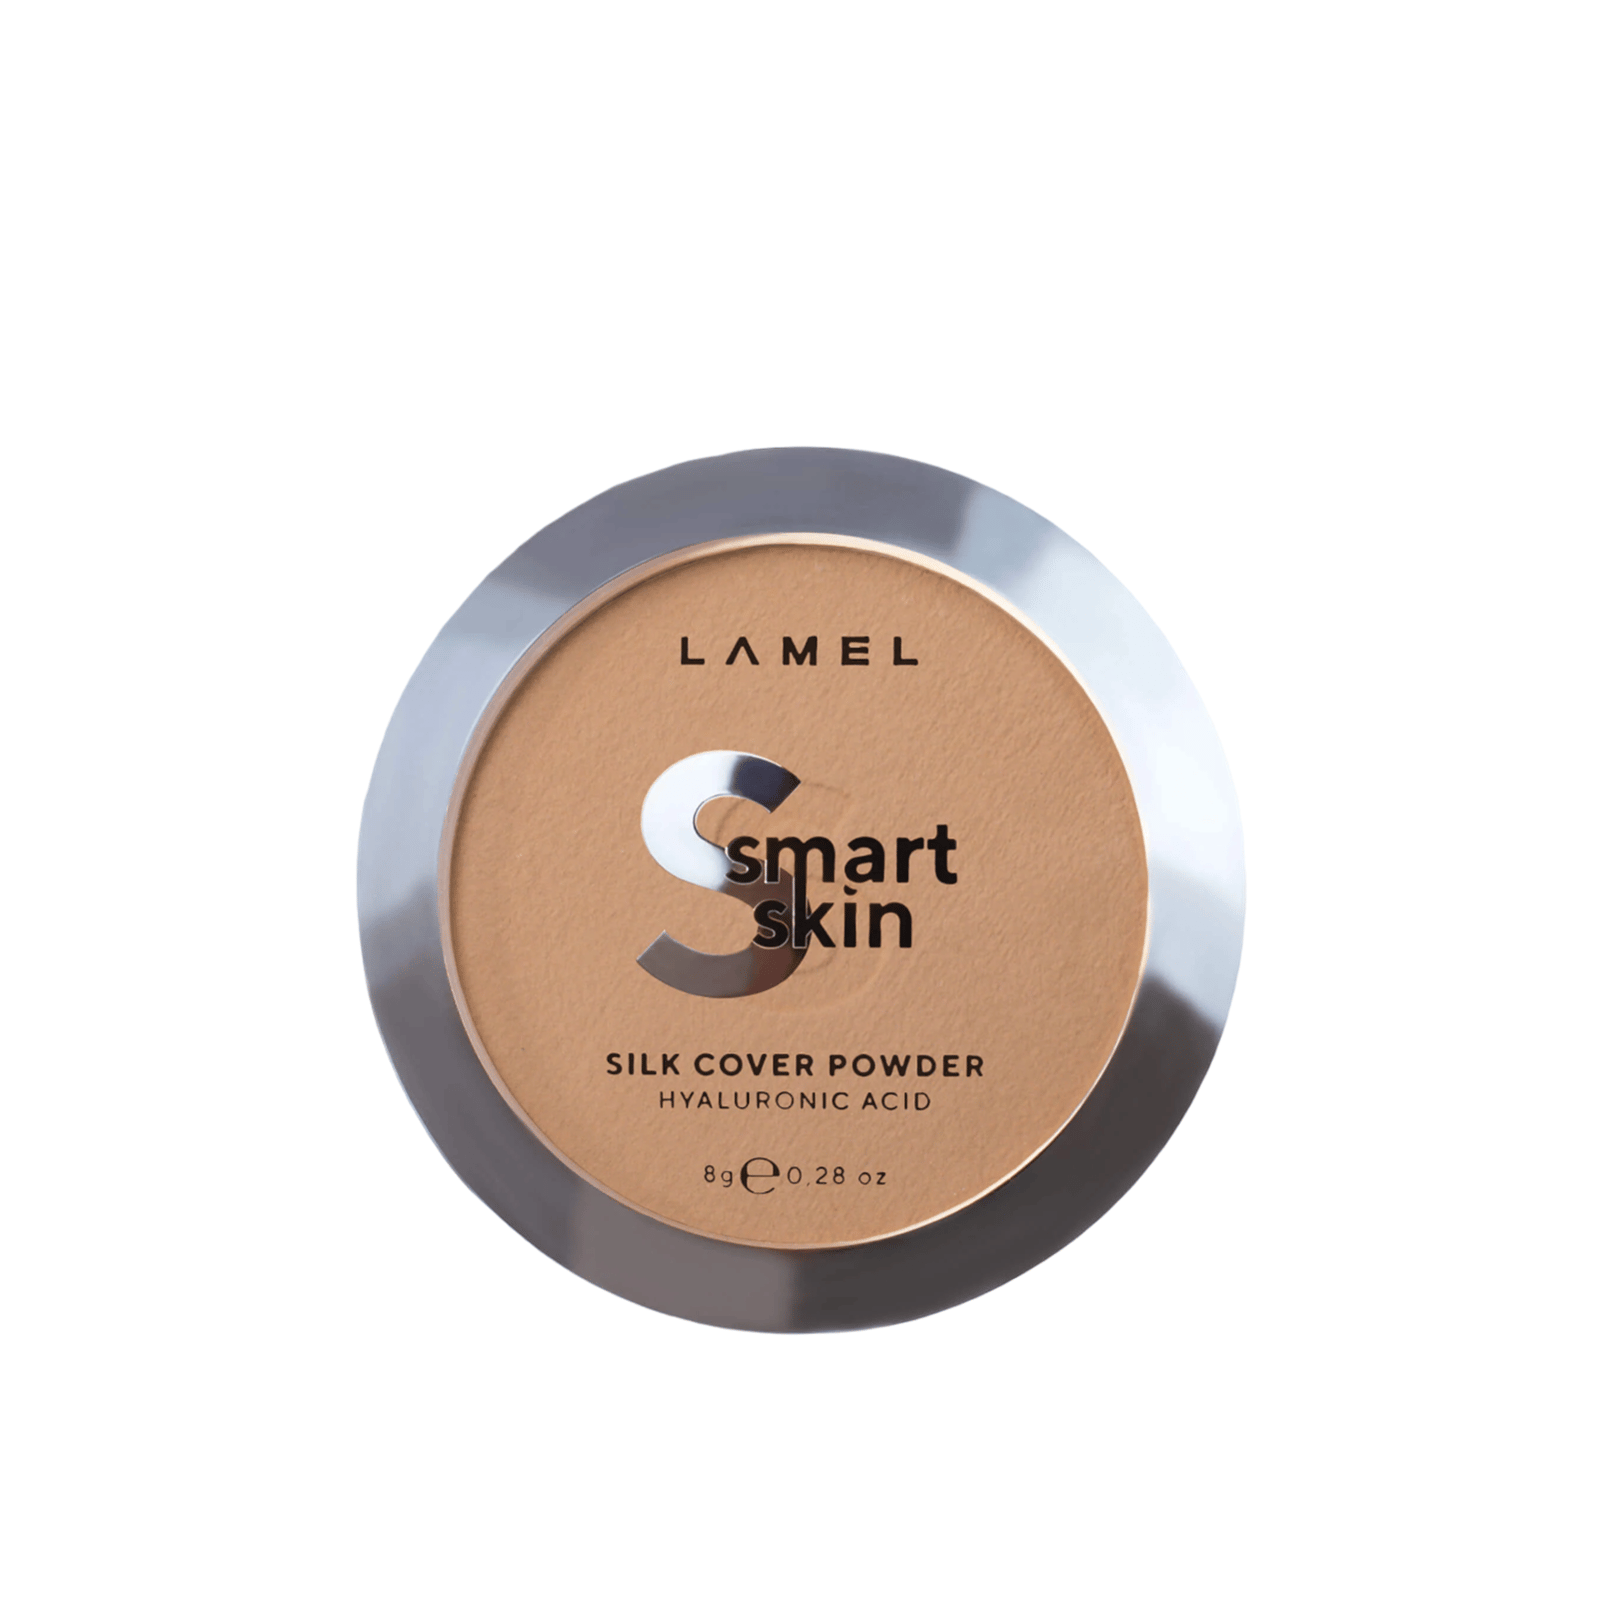 Lamel Smart Skin Silk Cover Powder 405 Golden Brown 8g (0.28oz)